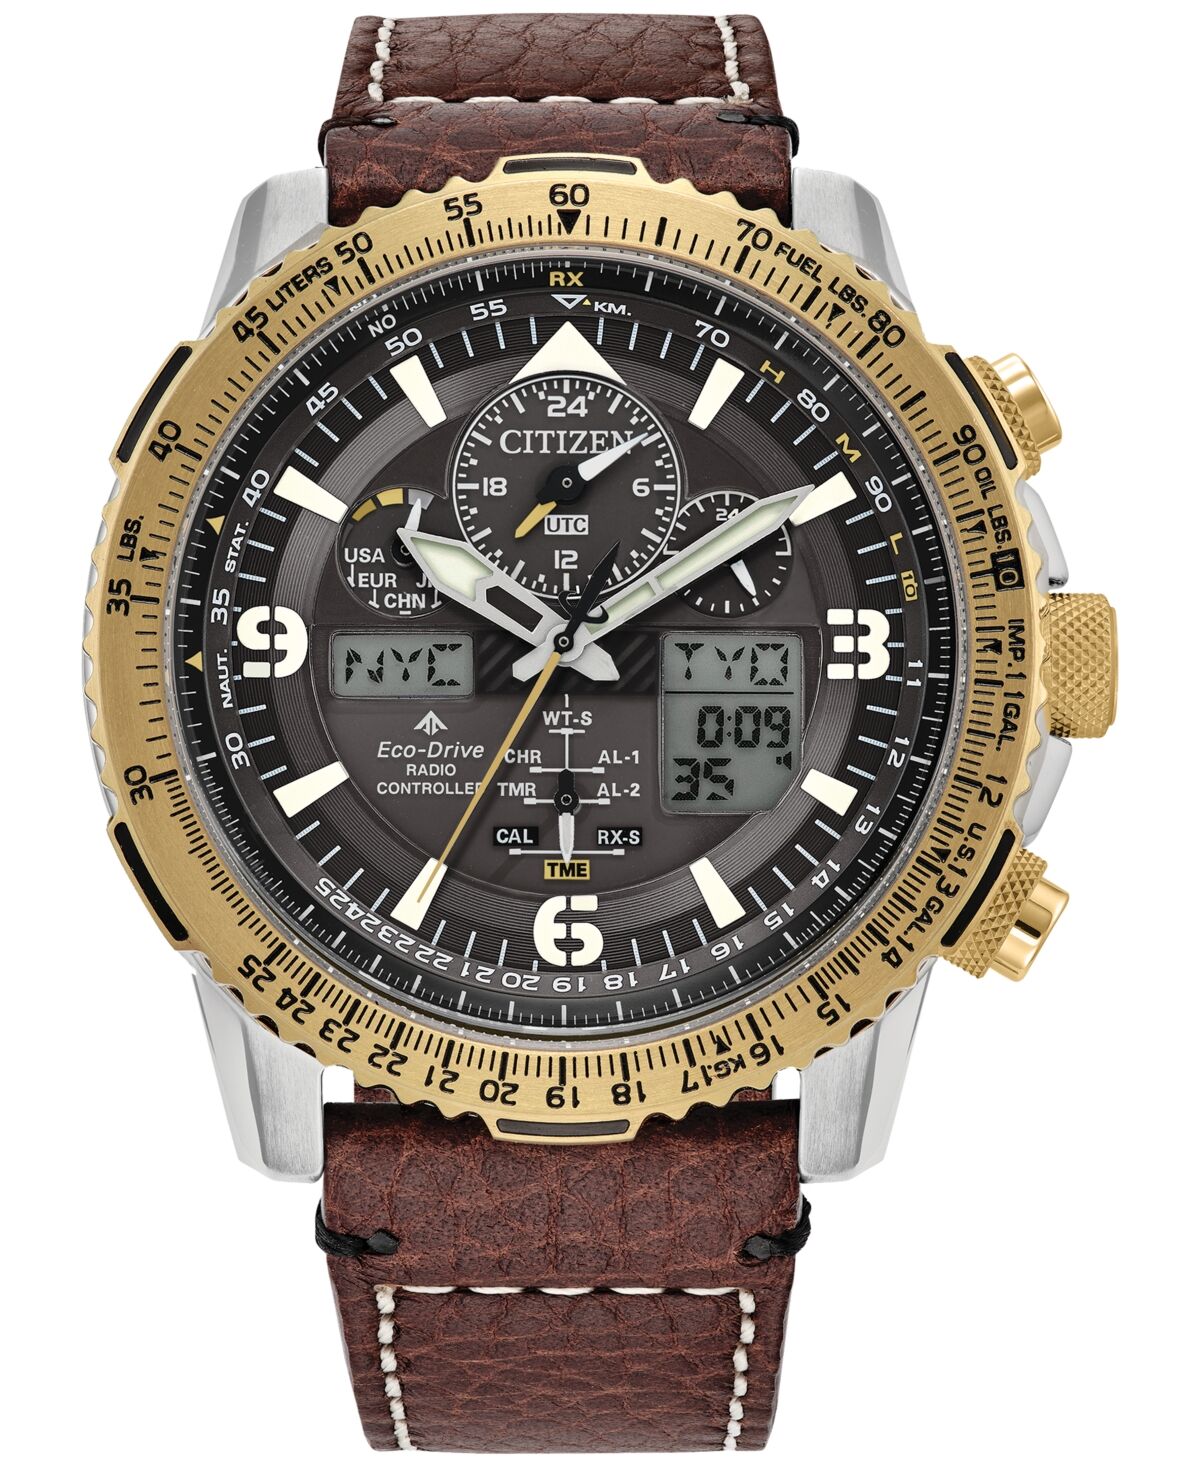 Citizen Eco-Drive Men's Chronograph Promaster Skyhawk Brown Leather Strap Watch 45mm - Brown